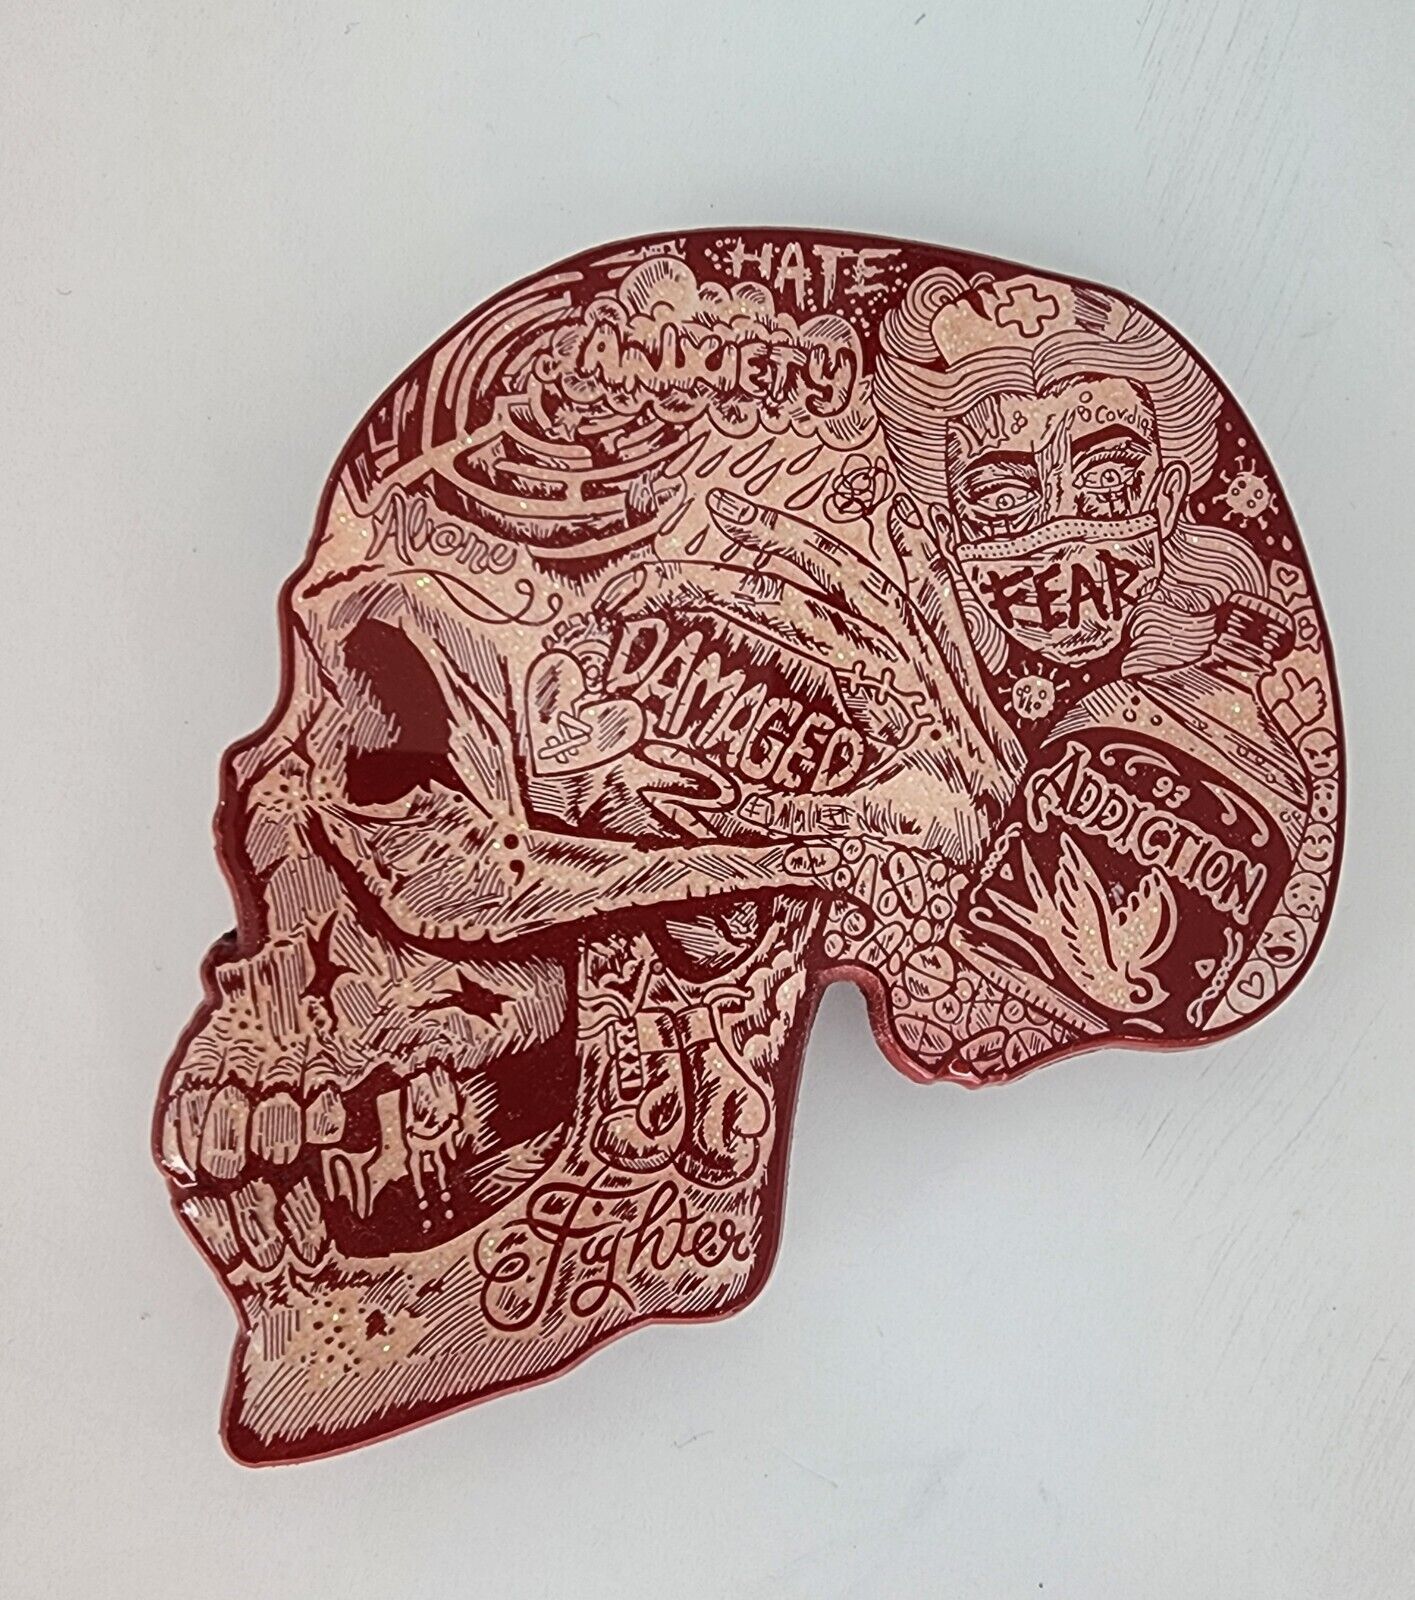 Little Sams Art Mental Health Skull Limited Edition Pin Very Rare Red Variant